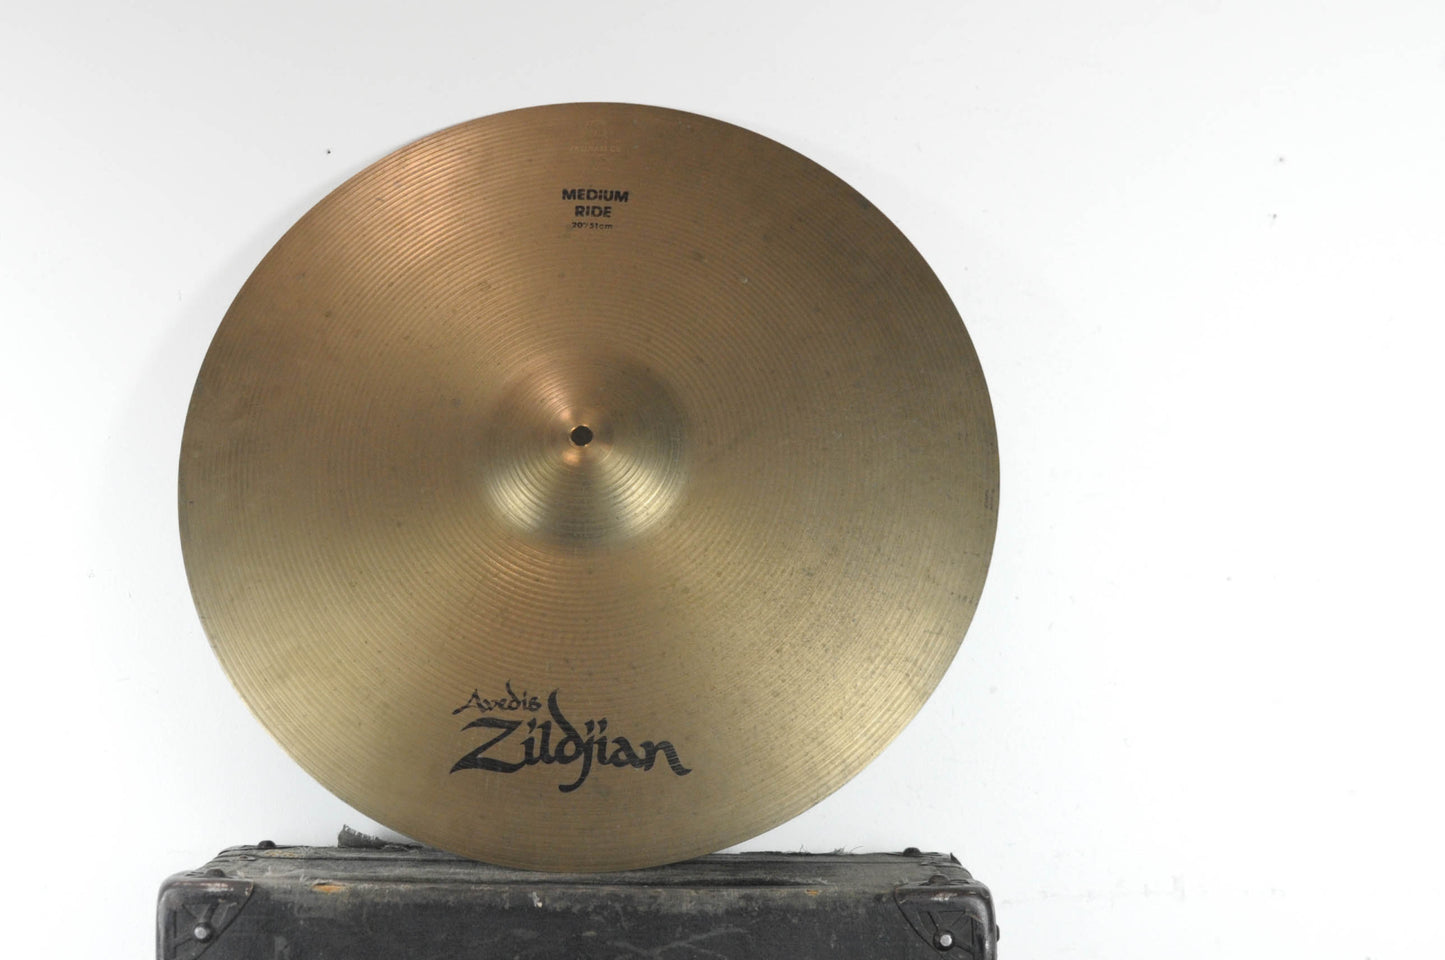 1995 Zildjian A 20" Medium Ride Cymbal 2336g